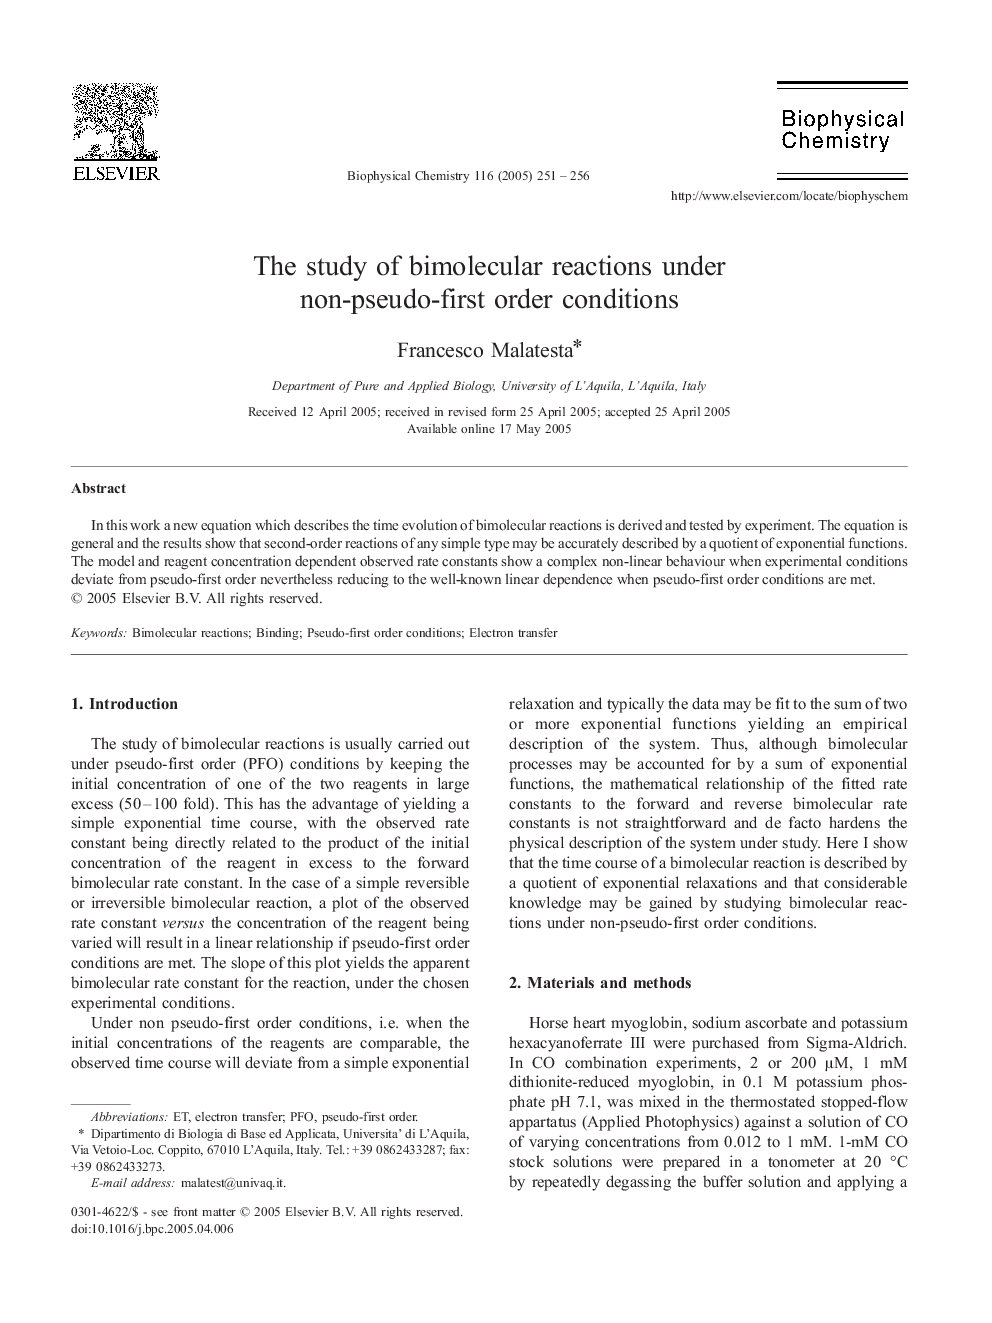 The study of bimolecular reactions under non-pseudo-first order conditions